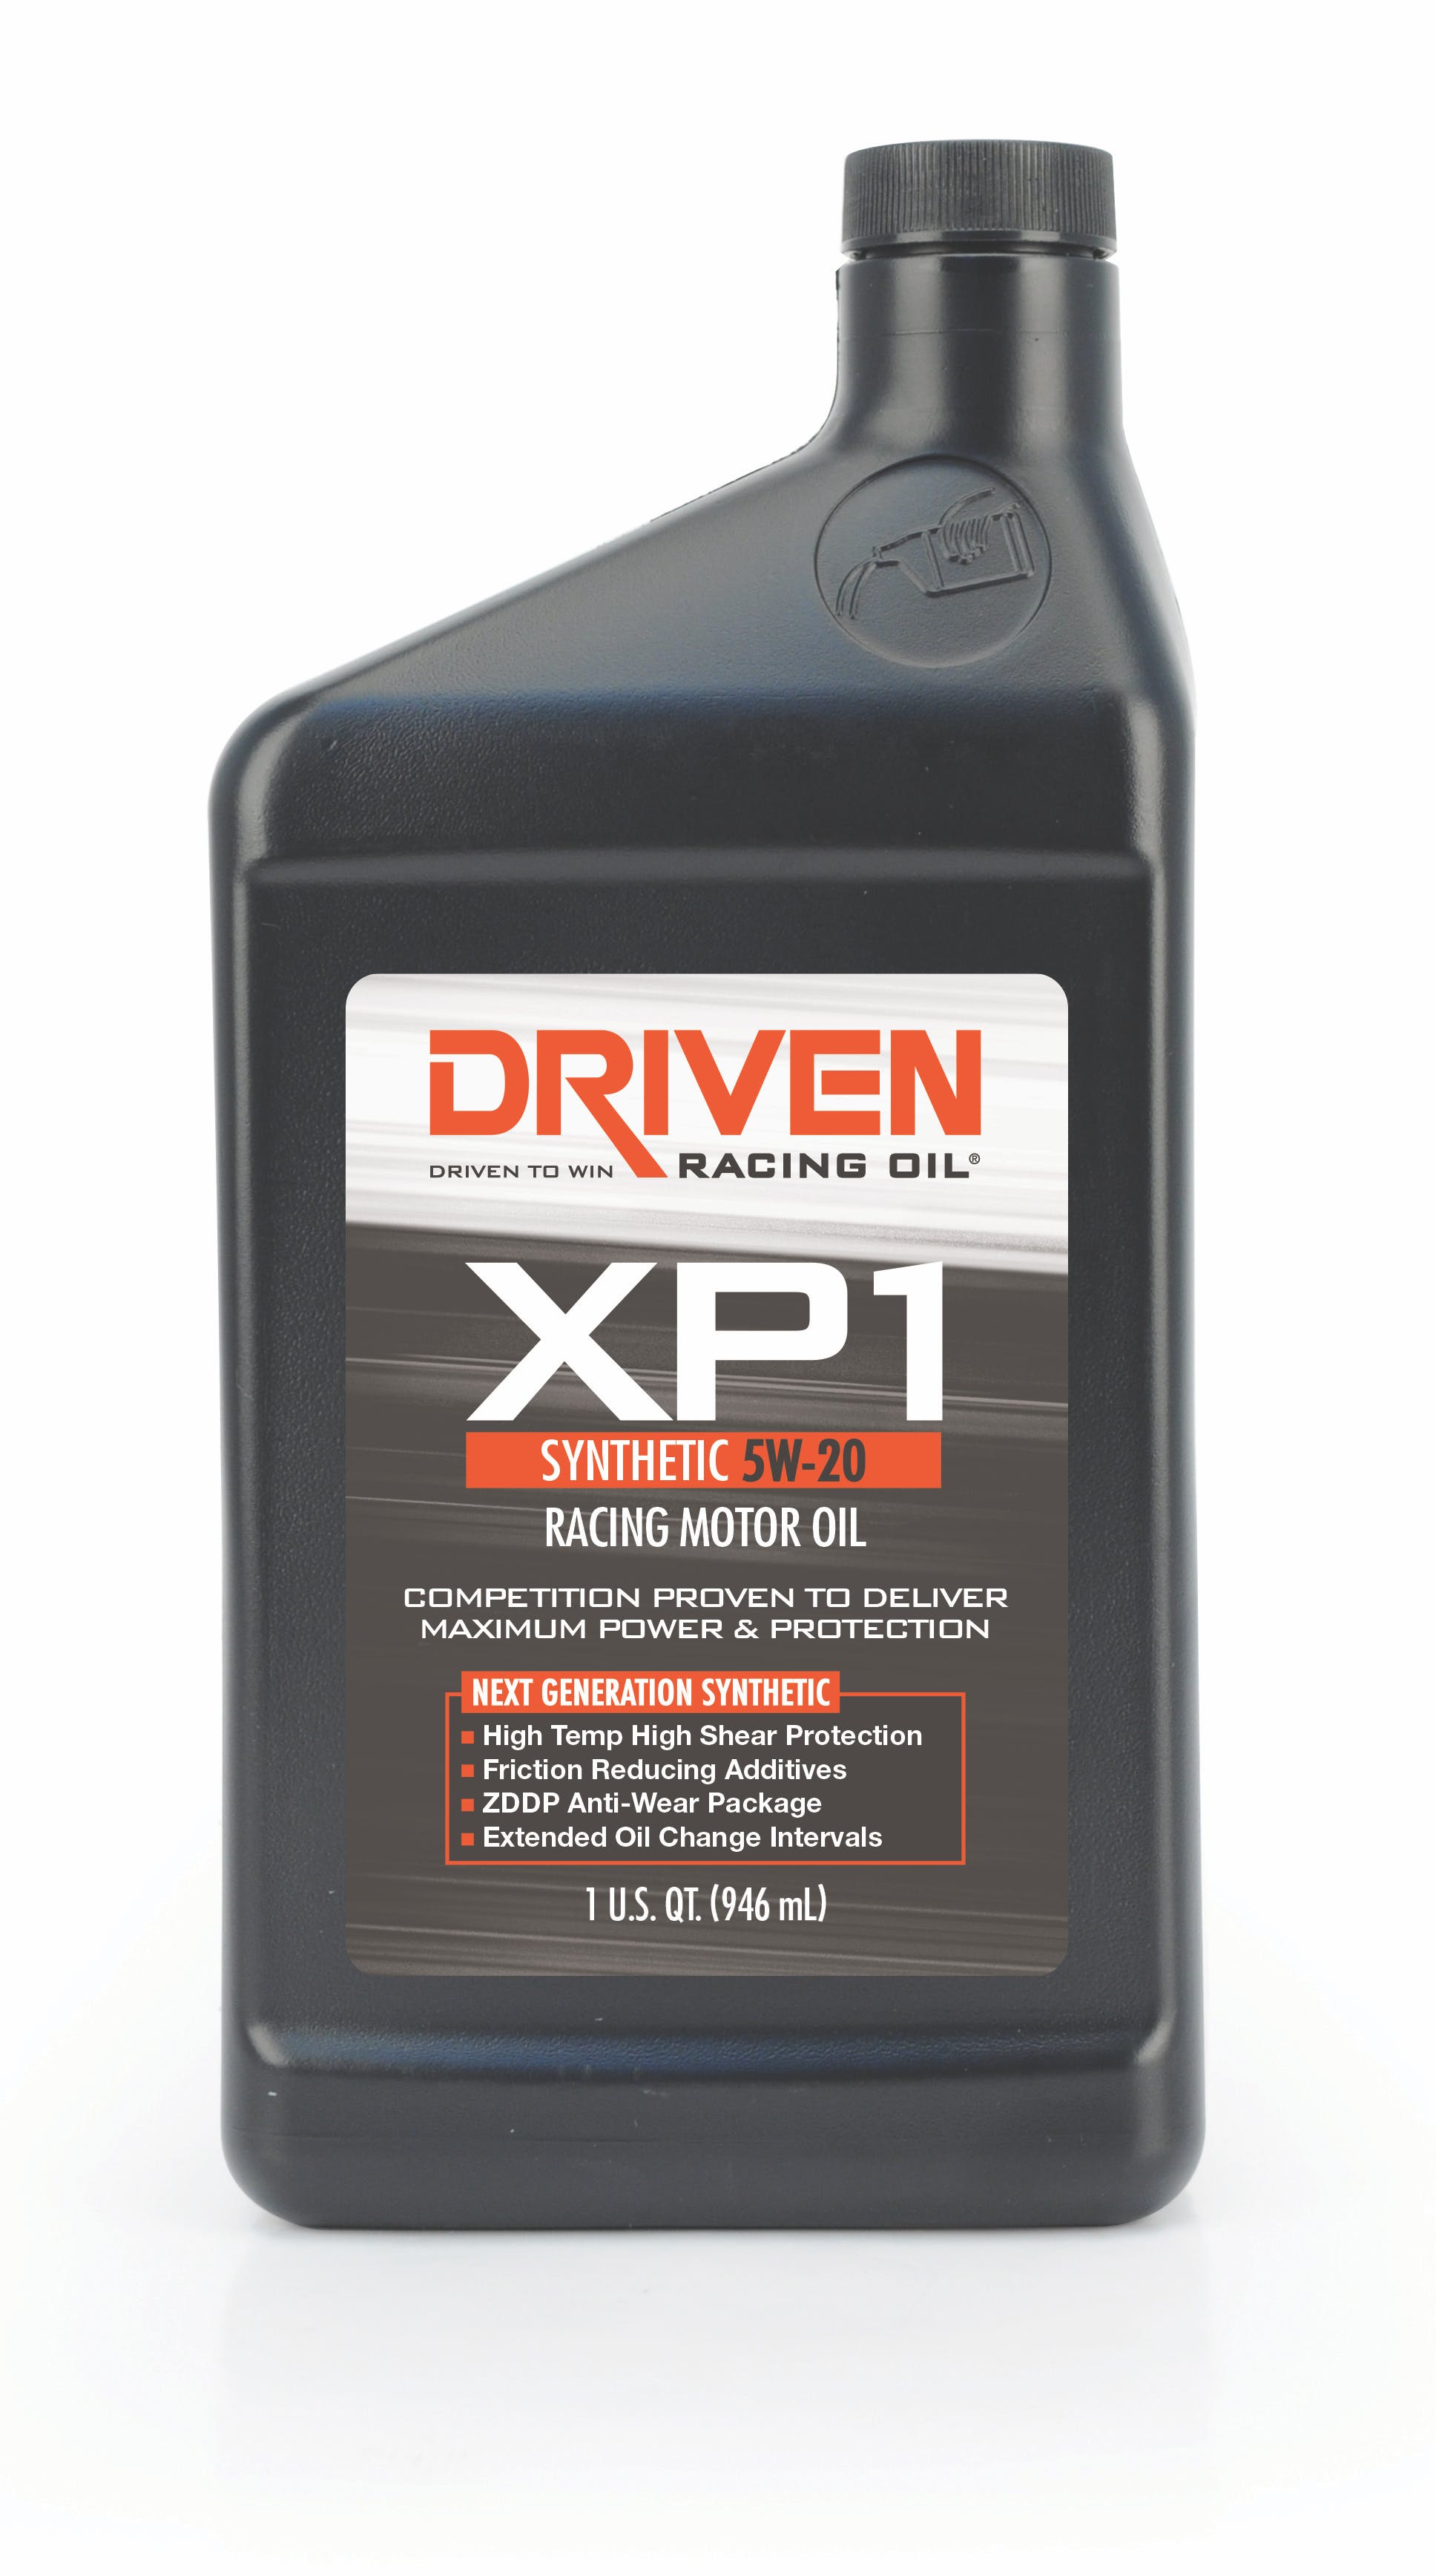 Driven Racing Oil 00006 XP1 5W-20 Racing Motor Oil (1 qt. bottle)